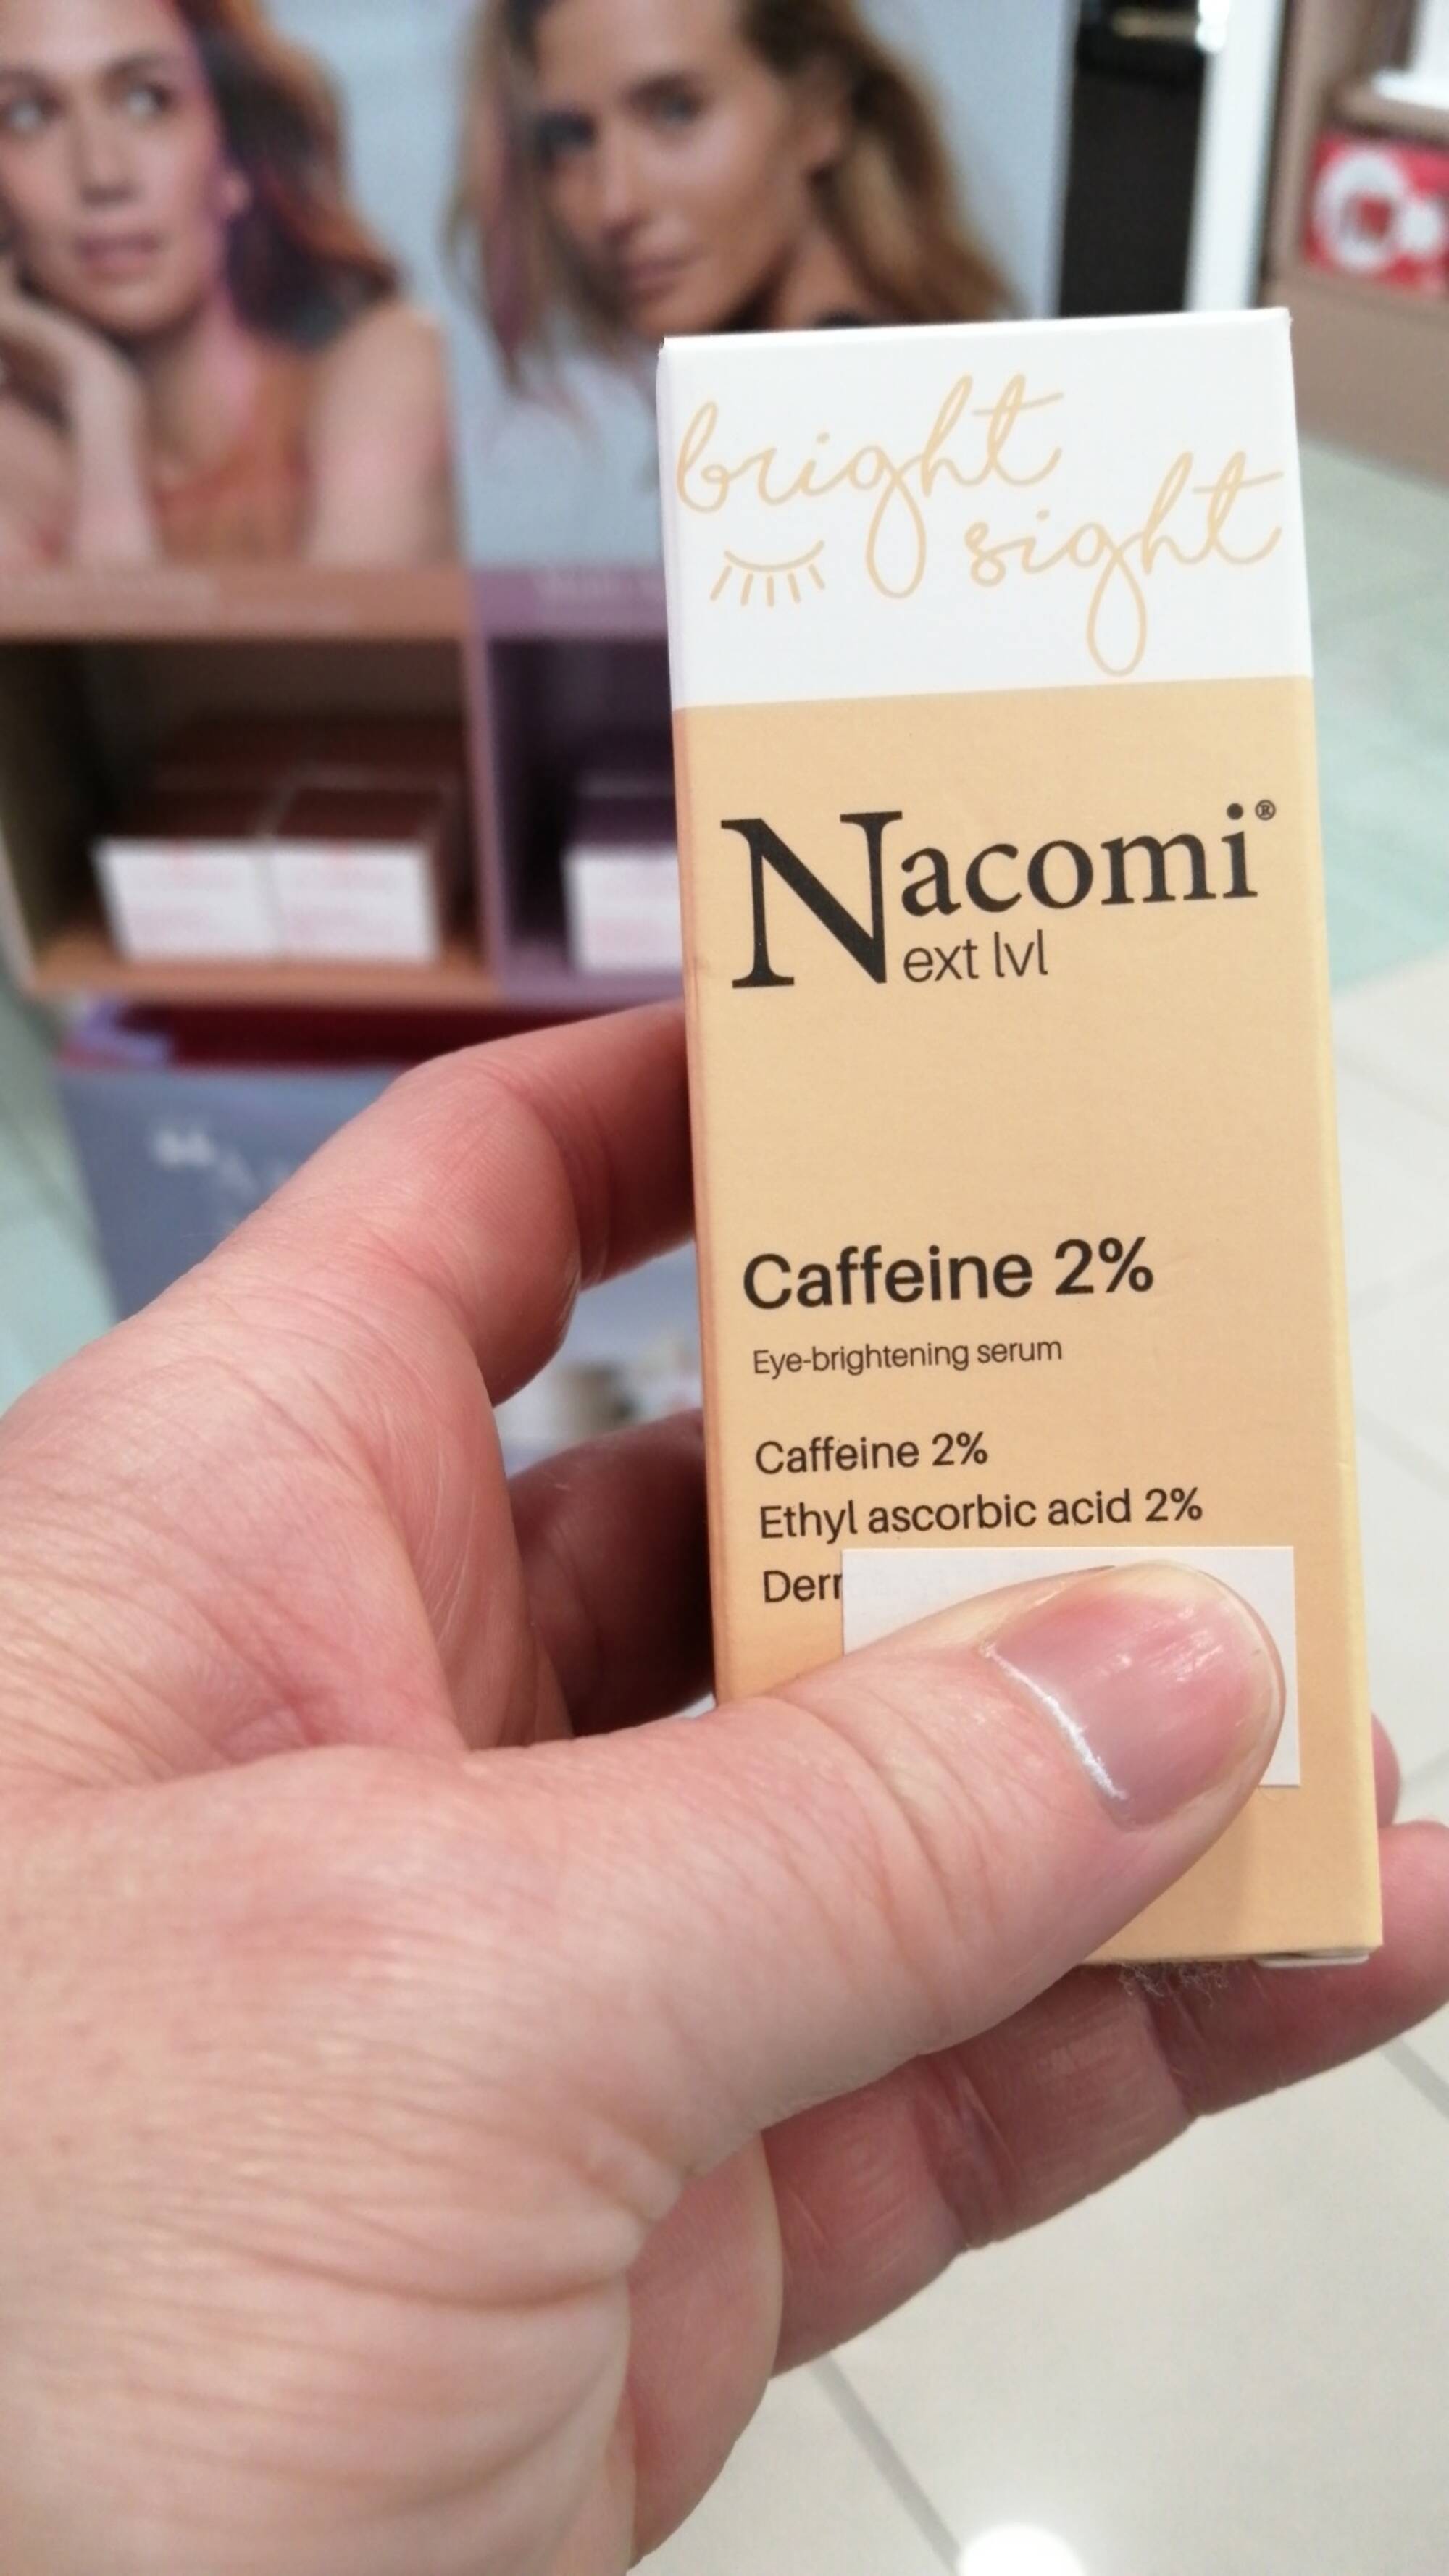 NACOMI - Next level - Eye-brightening serum Caffeine 2%